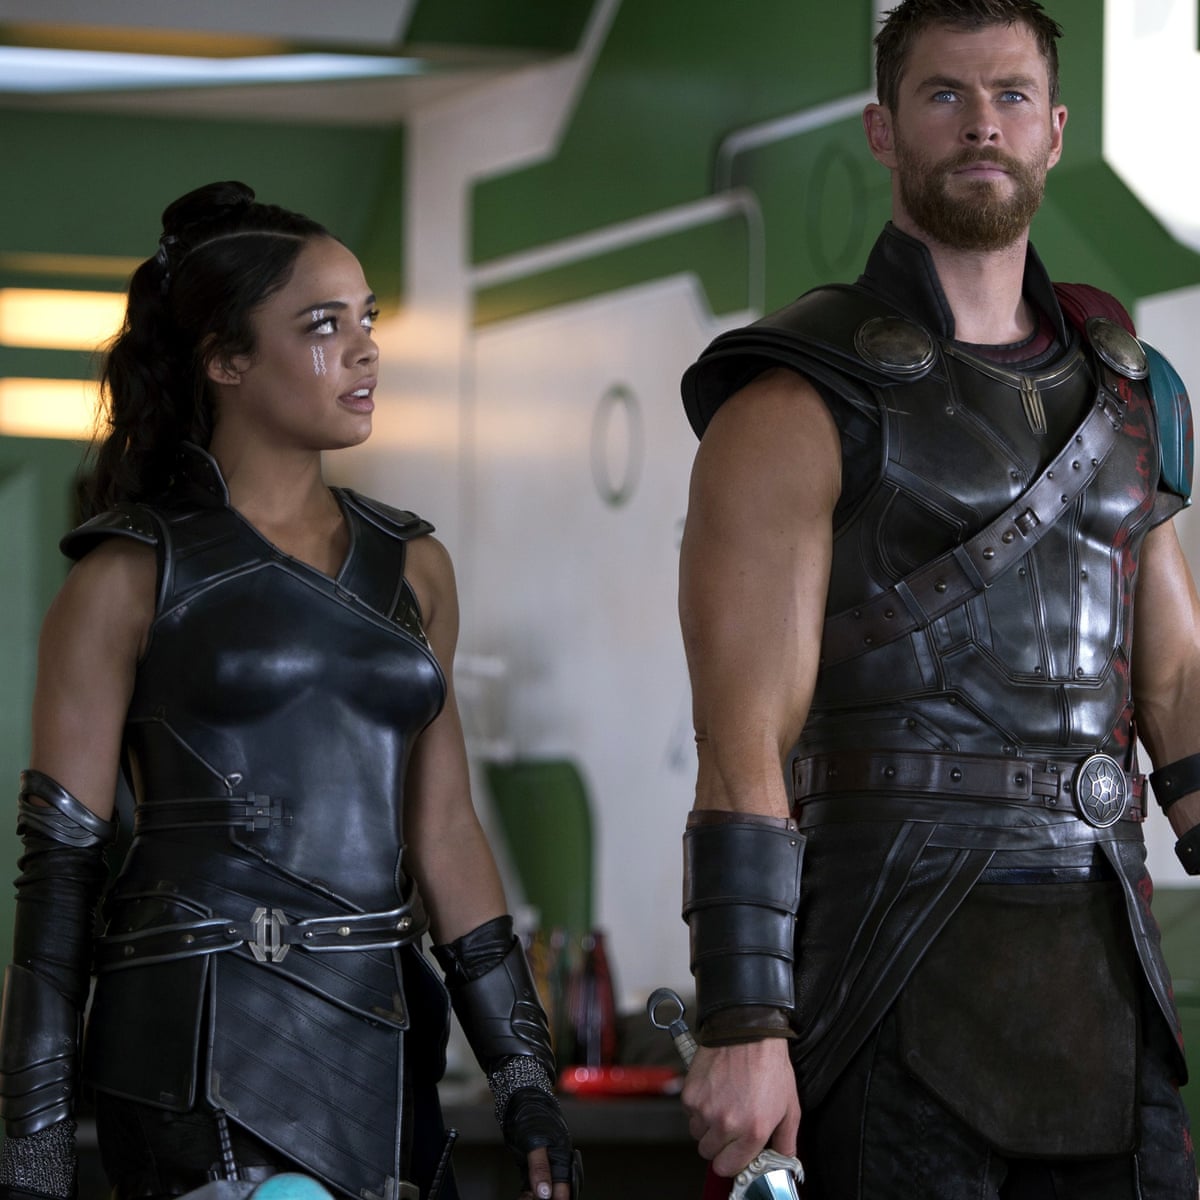 Thor: Ragnarok – is it really Marvel's best movie yet? Discuss ...